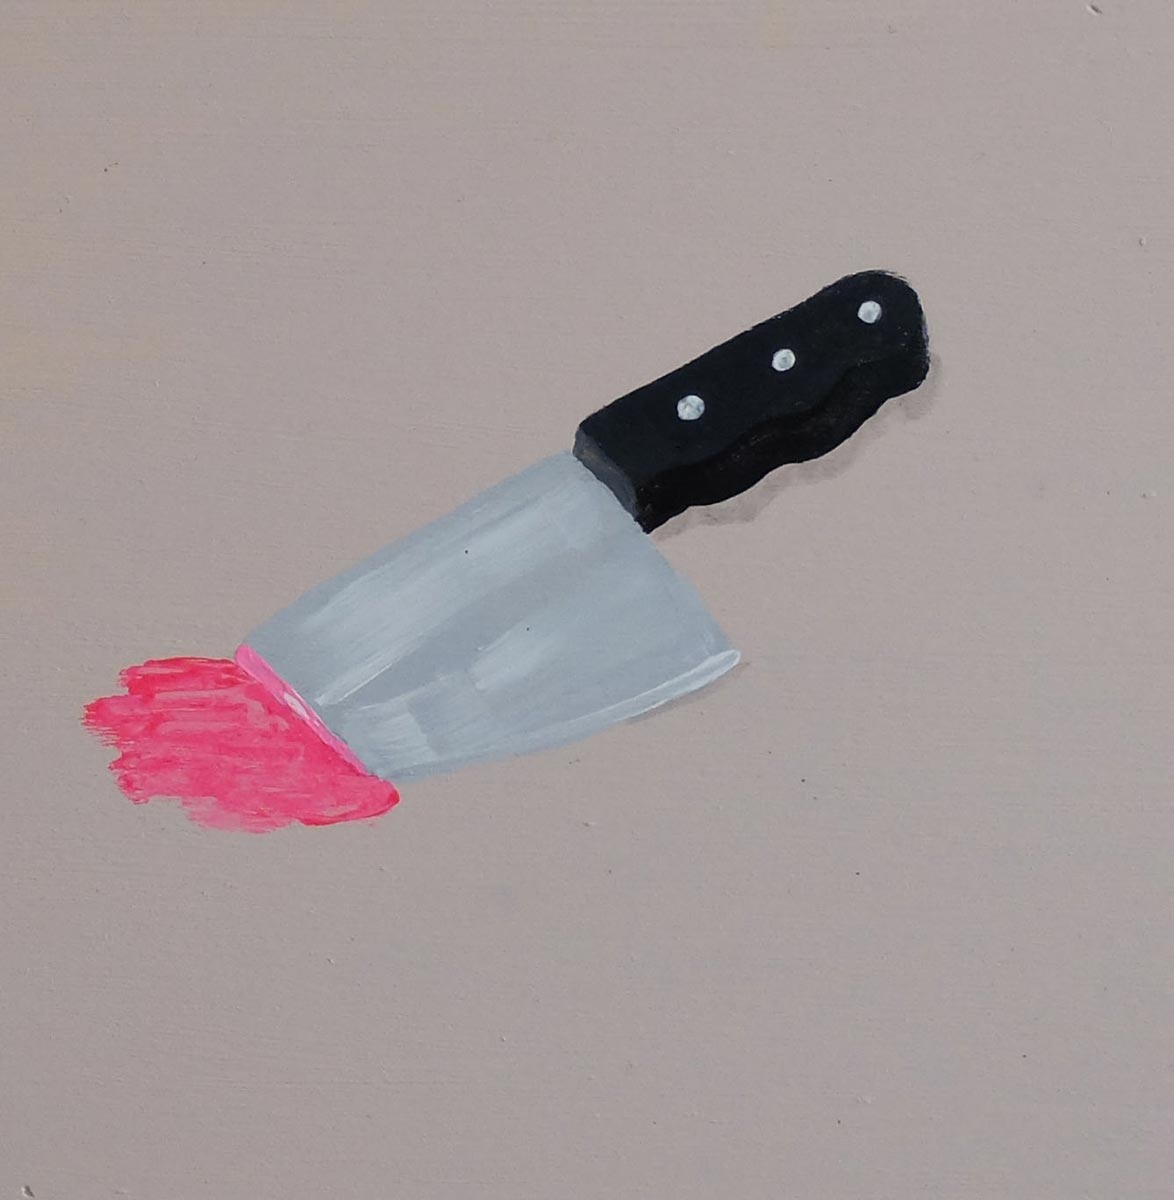 Dead cuchillo, 2016, acrylic on plywood, 20 x 20 cm